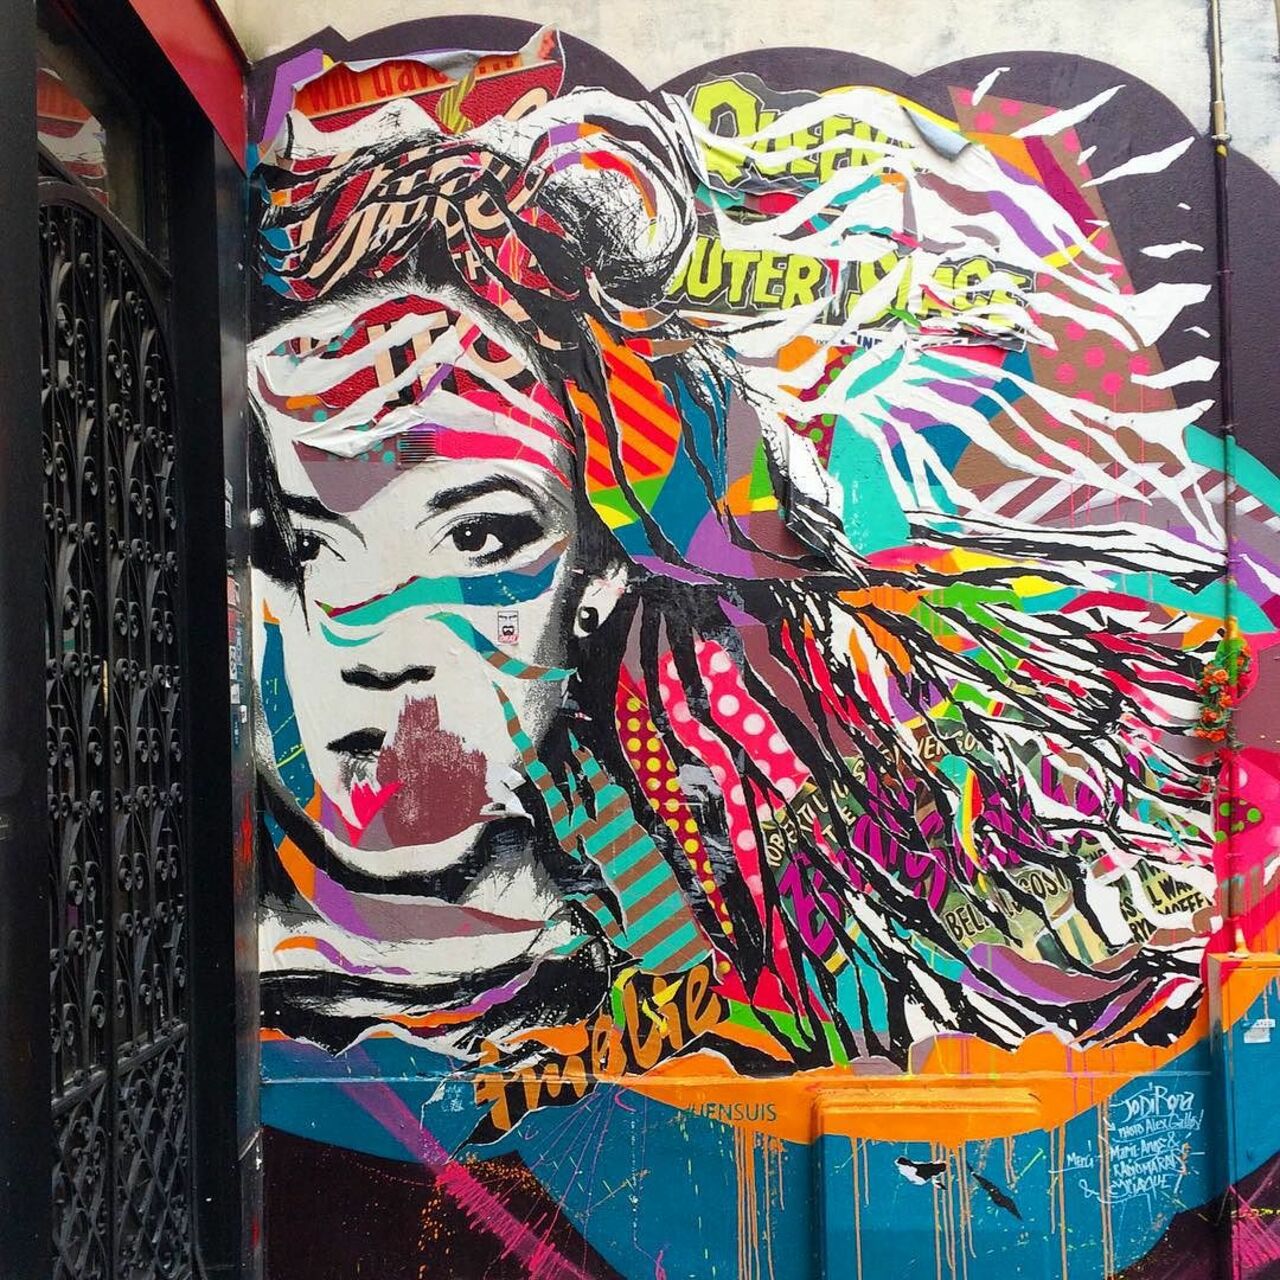 #Paris #graffiti photo by @benapix http://ift.tt/1W6T6Zc #StreetArt https://t.co/JdwTNFEUNl